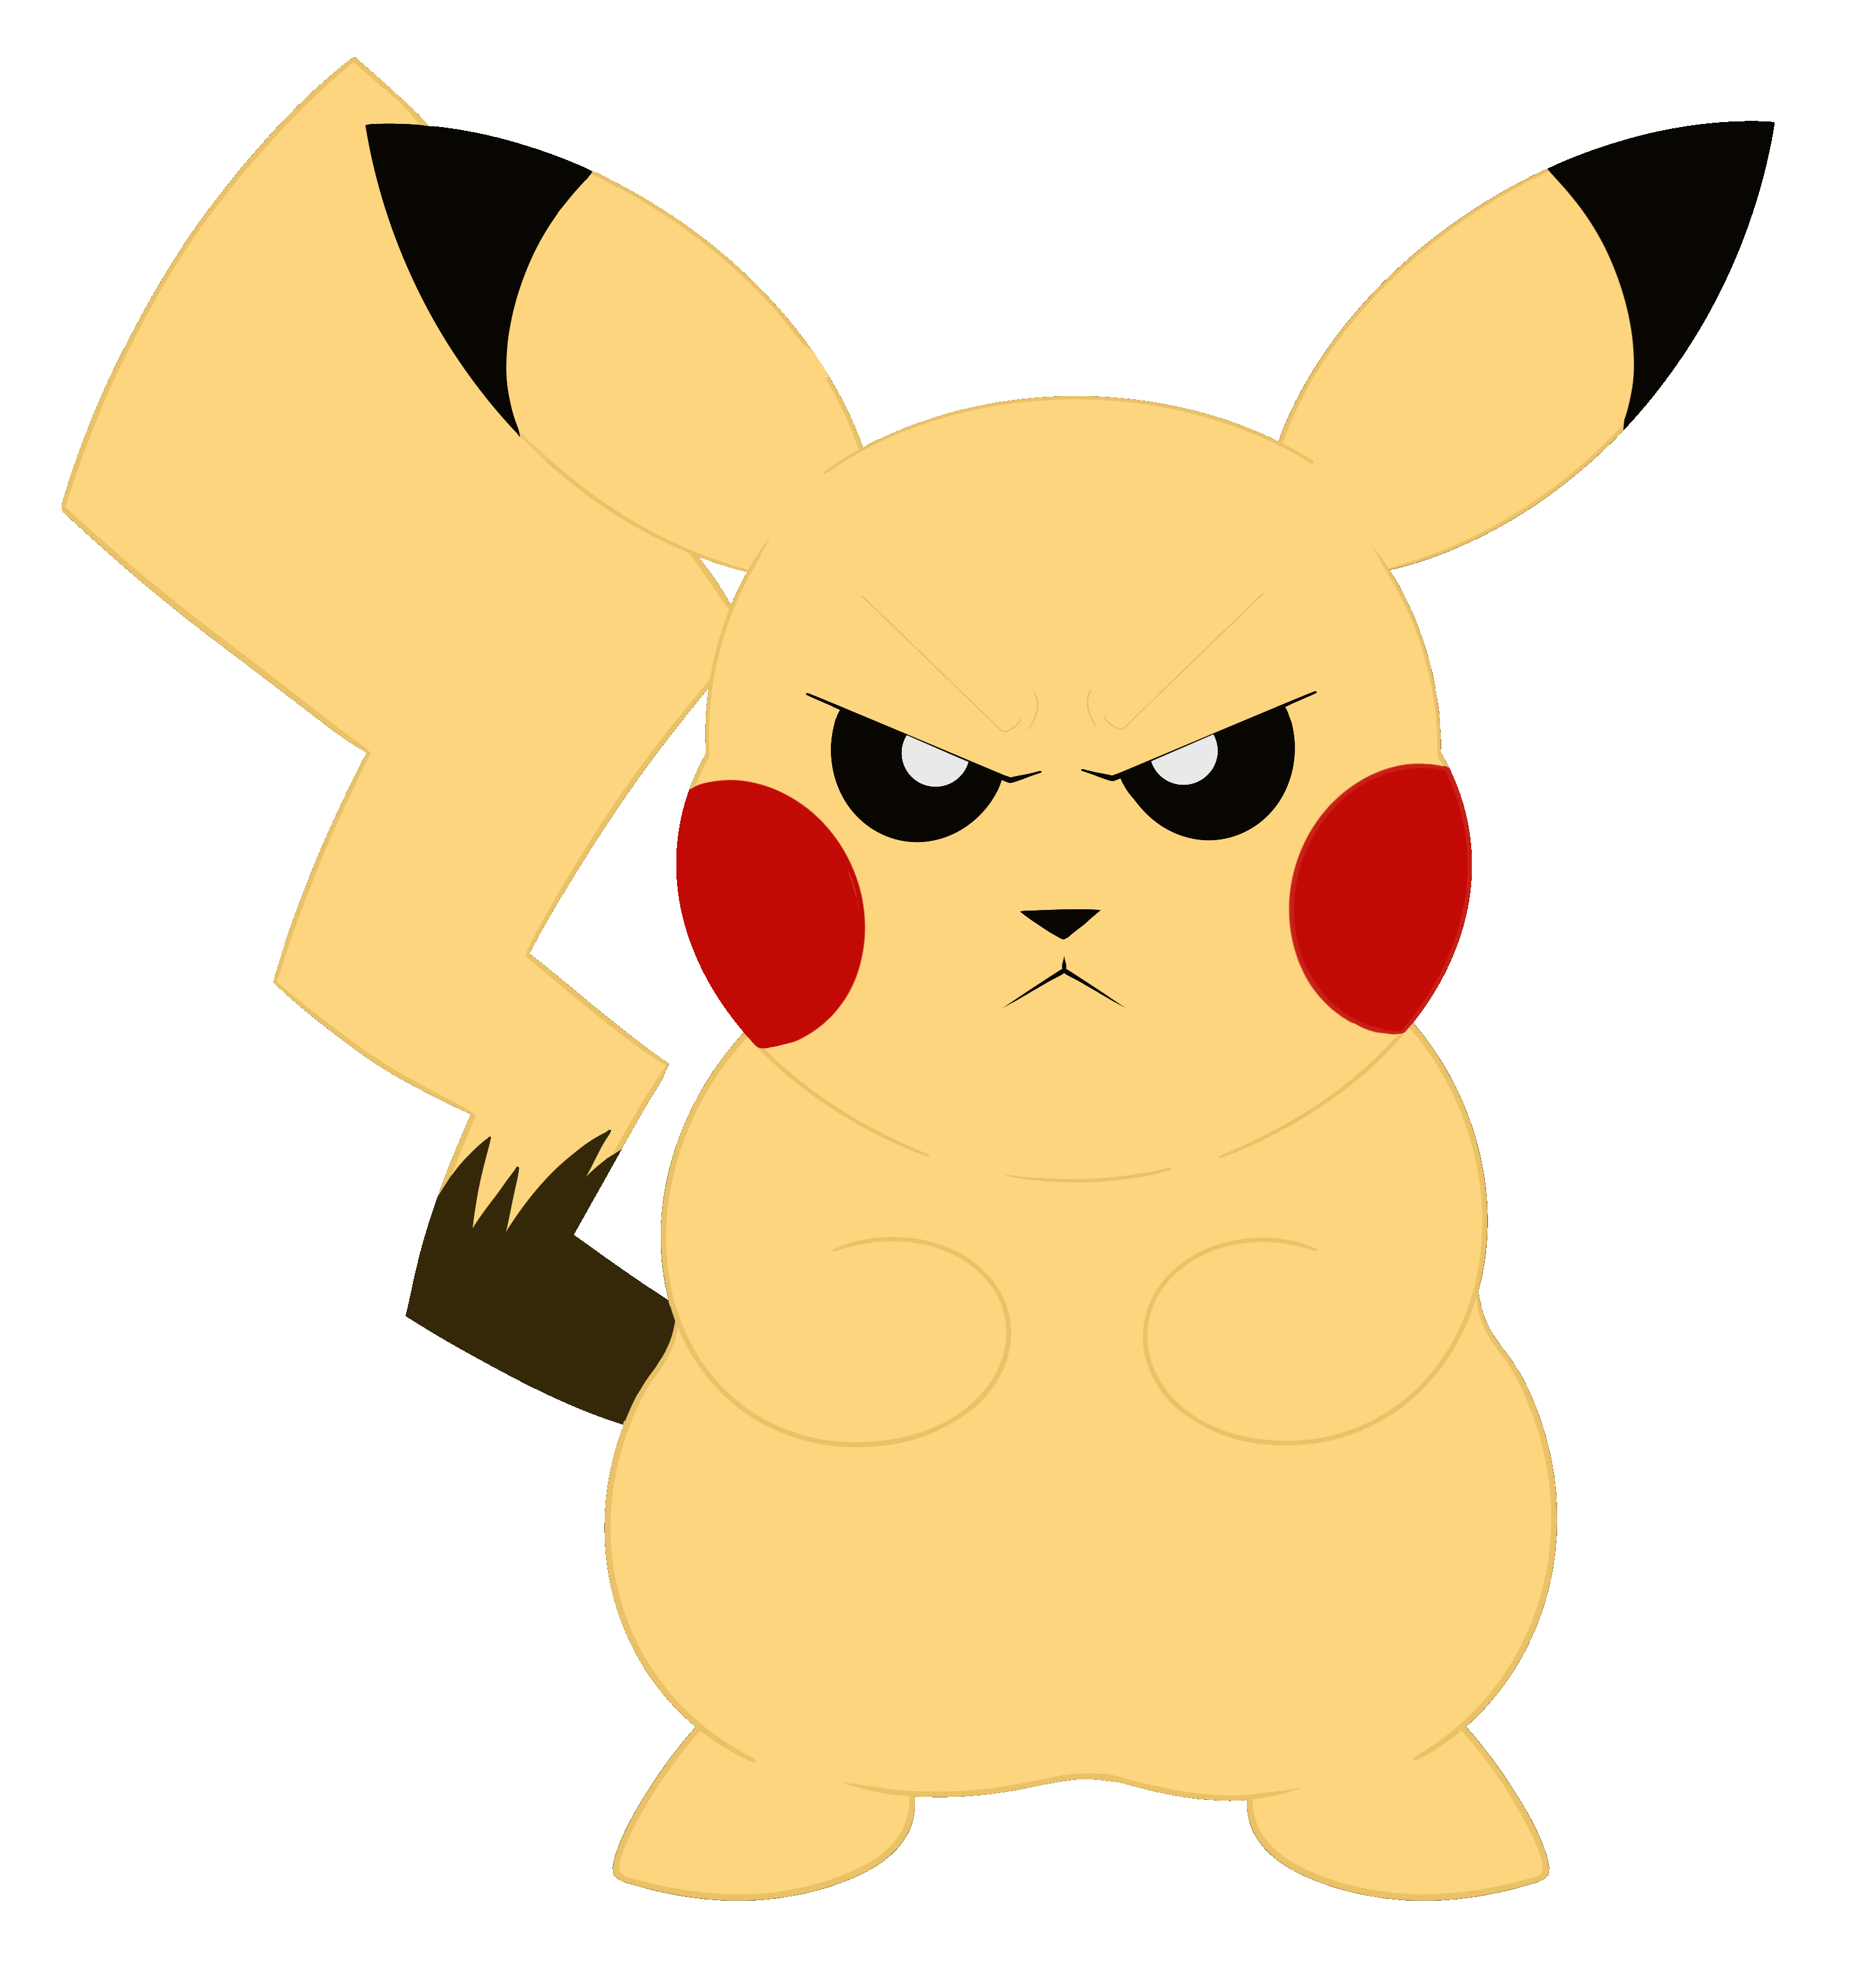 pikachu gif by Pokemon-gamer-kay on DeviantArt